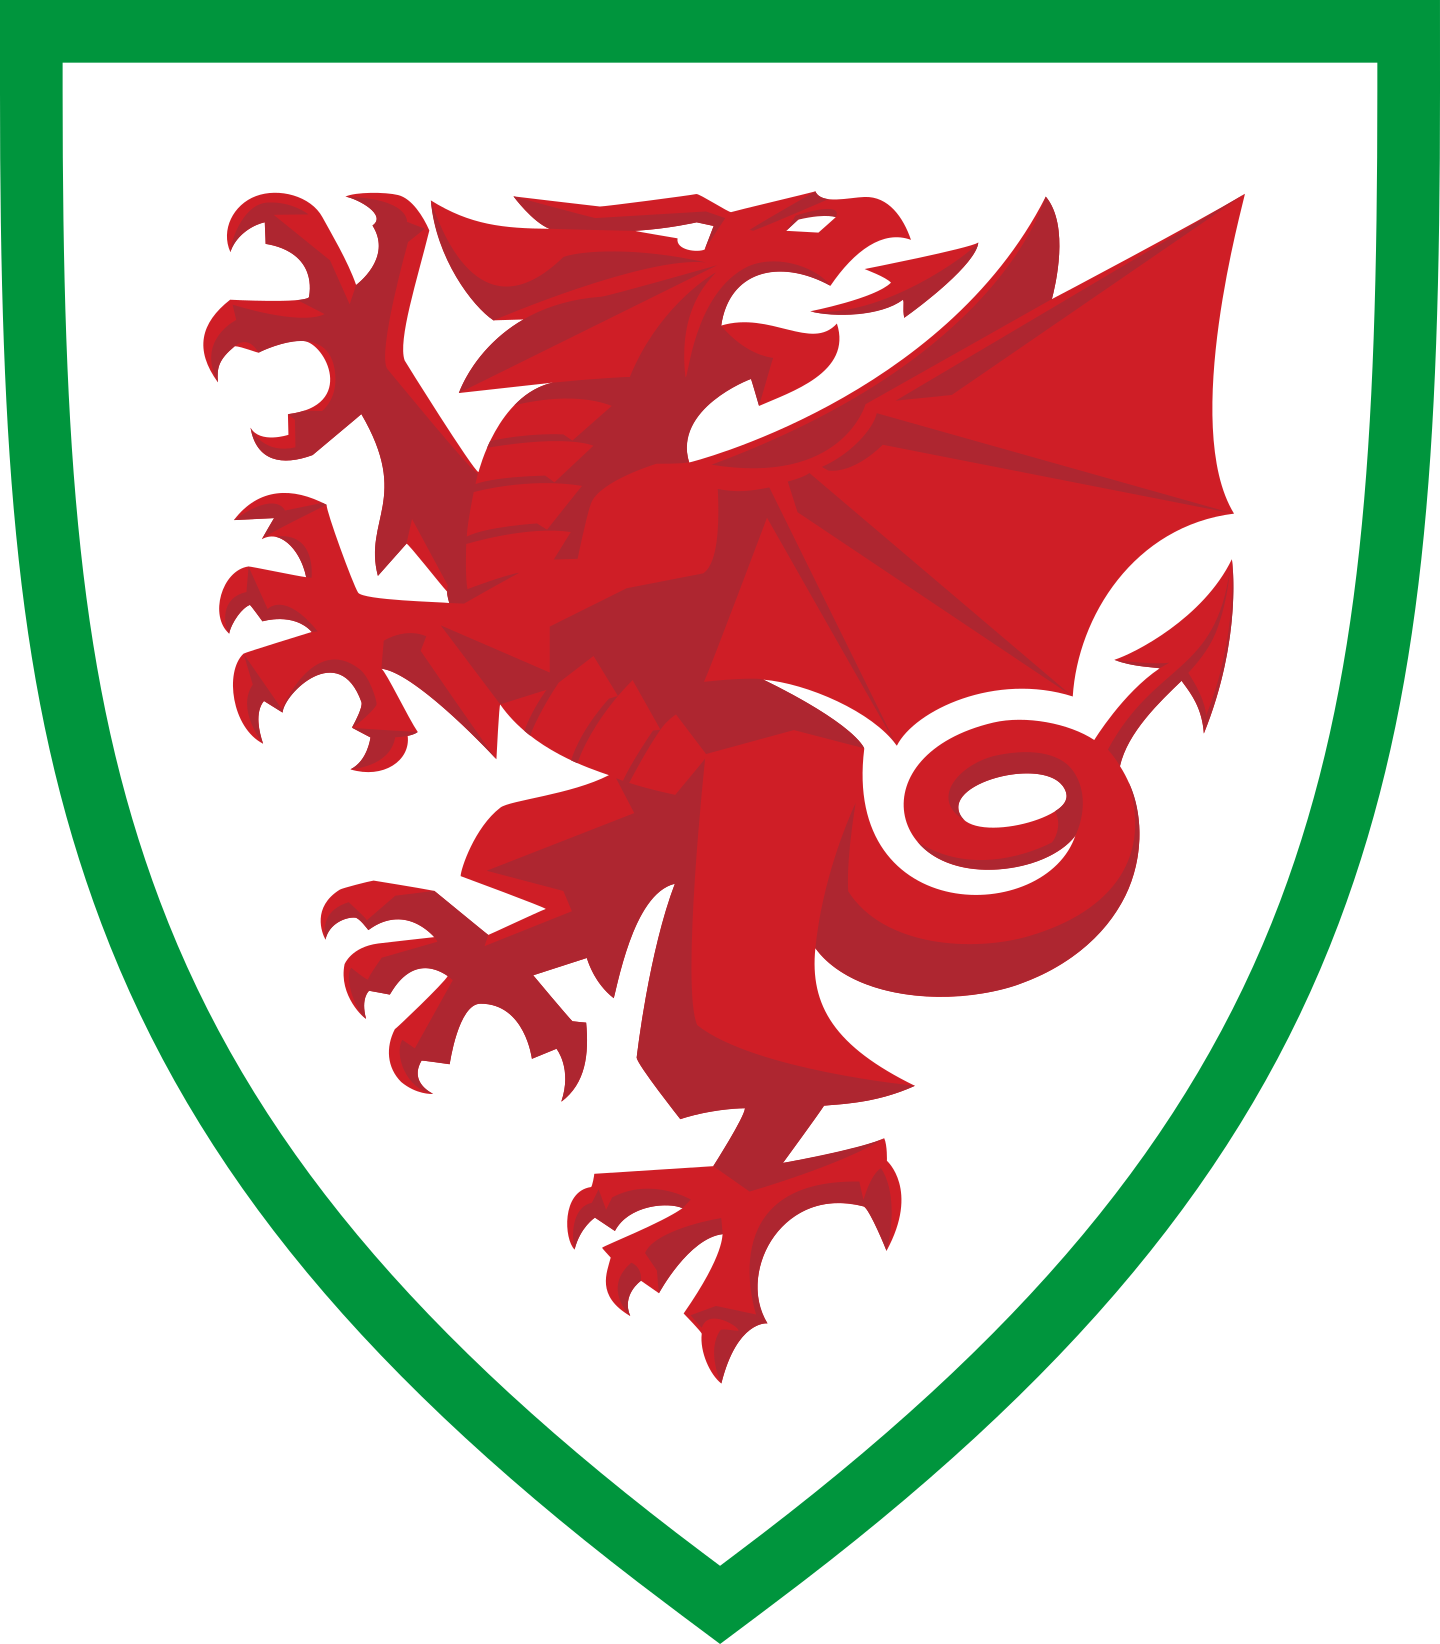 wales national football team logo 2 - Wales National Football Team Logo